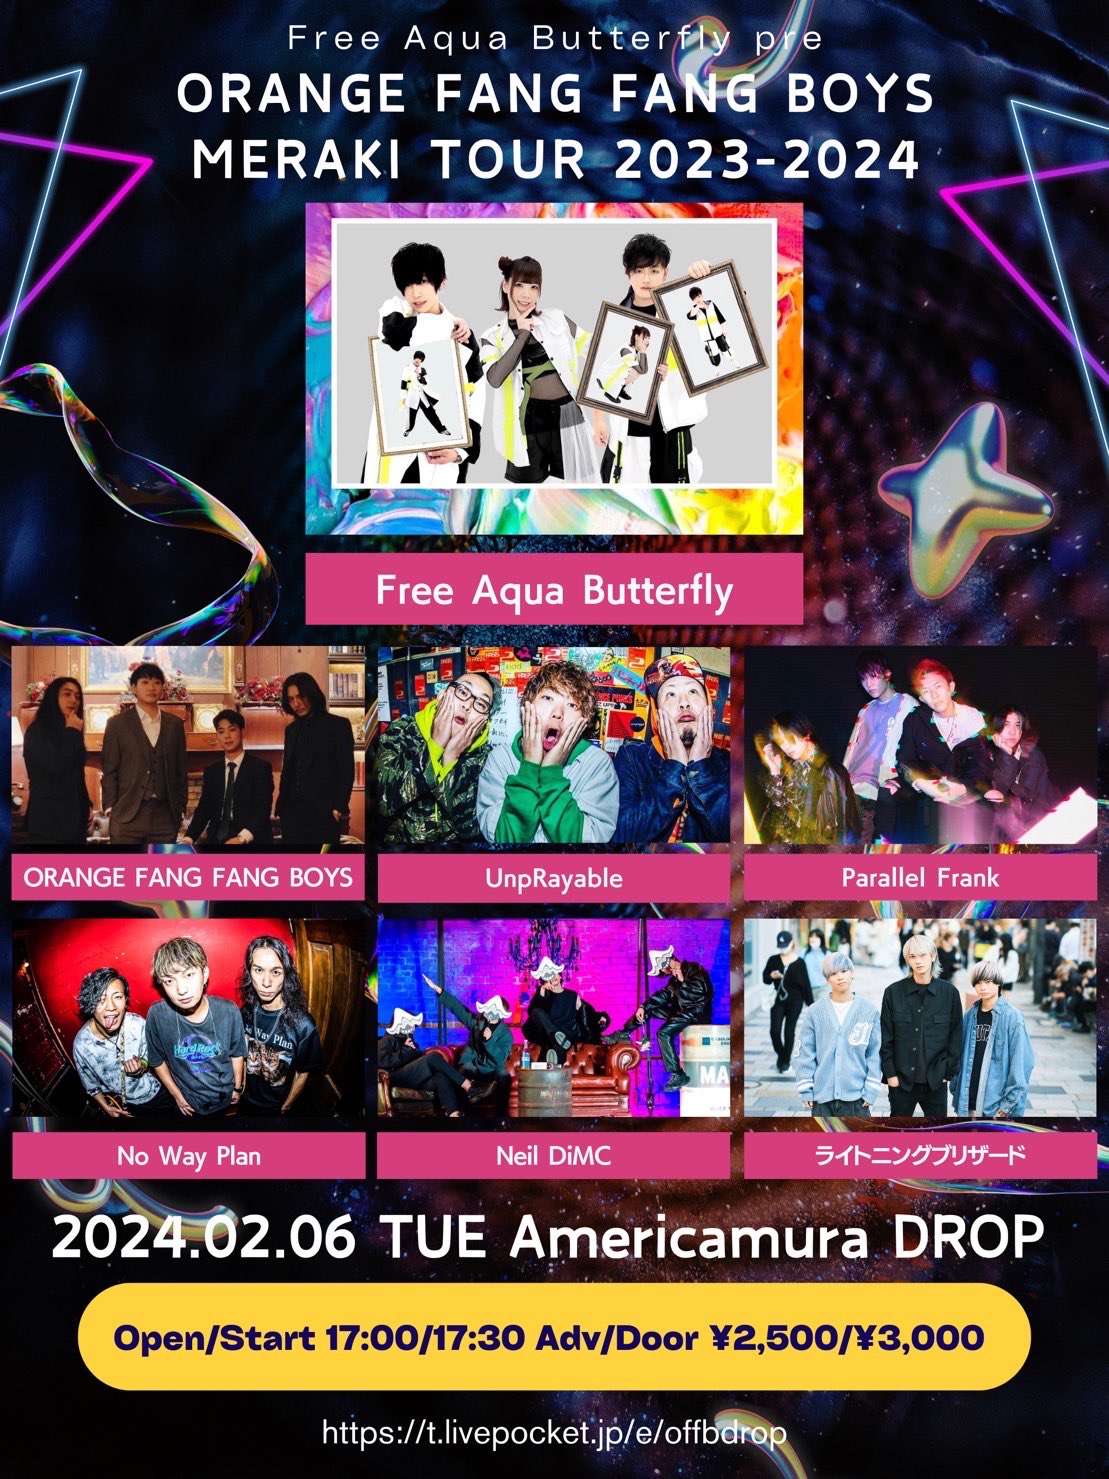 Free Aqua Butterfly pre. ORANGE FANG FANG BOYS MERAKI TOUR 2023-2024